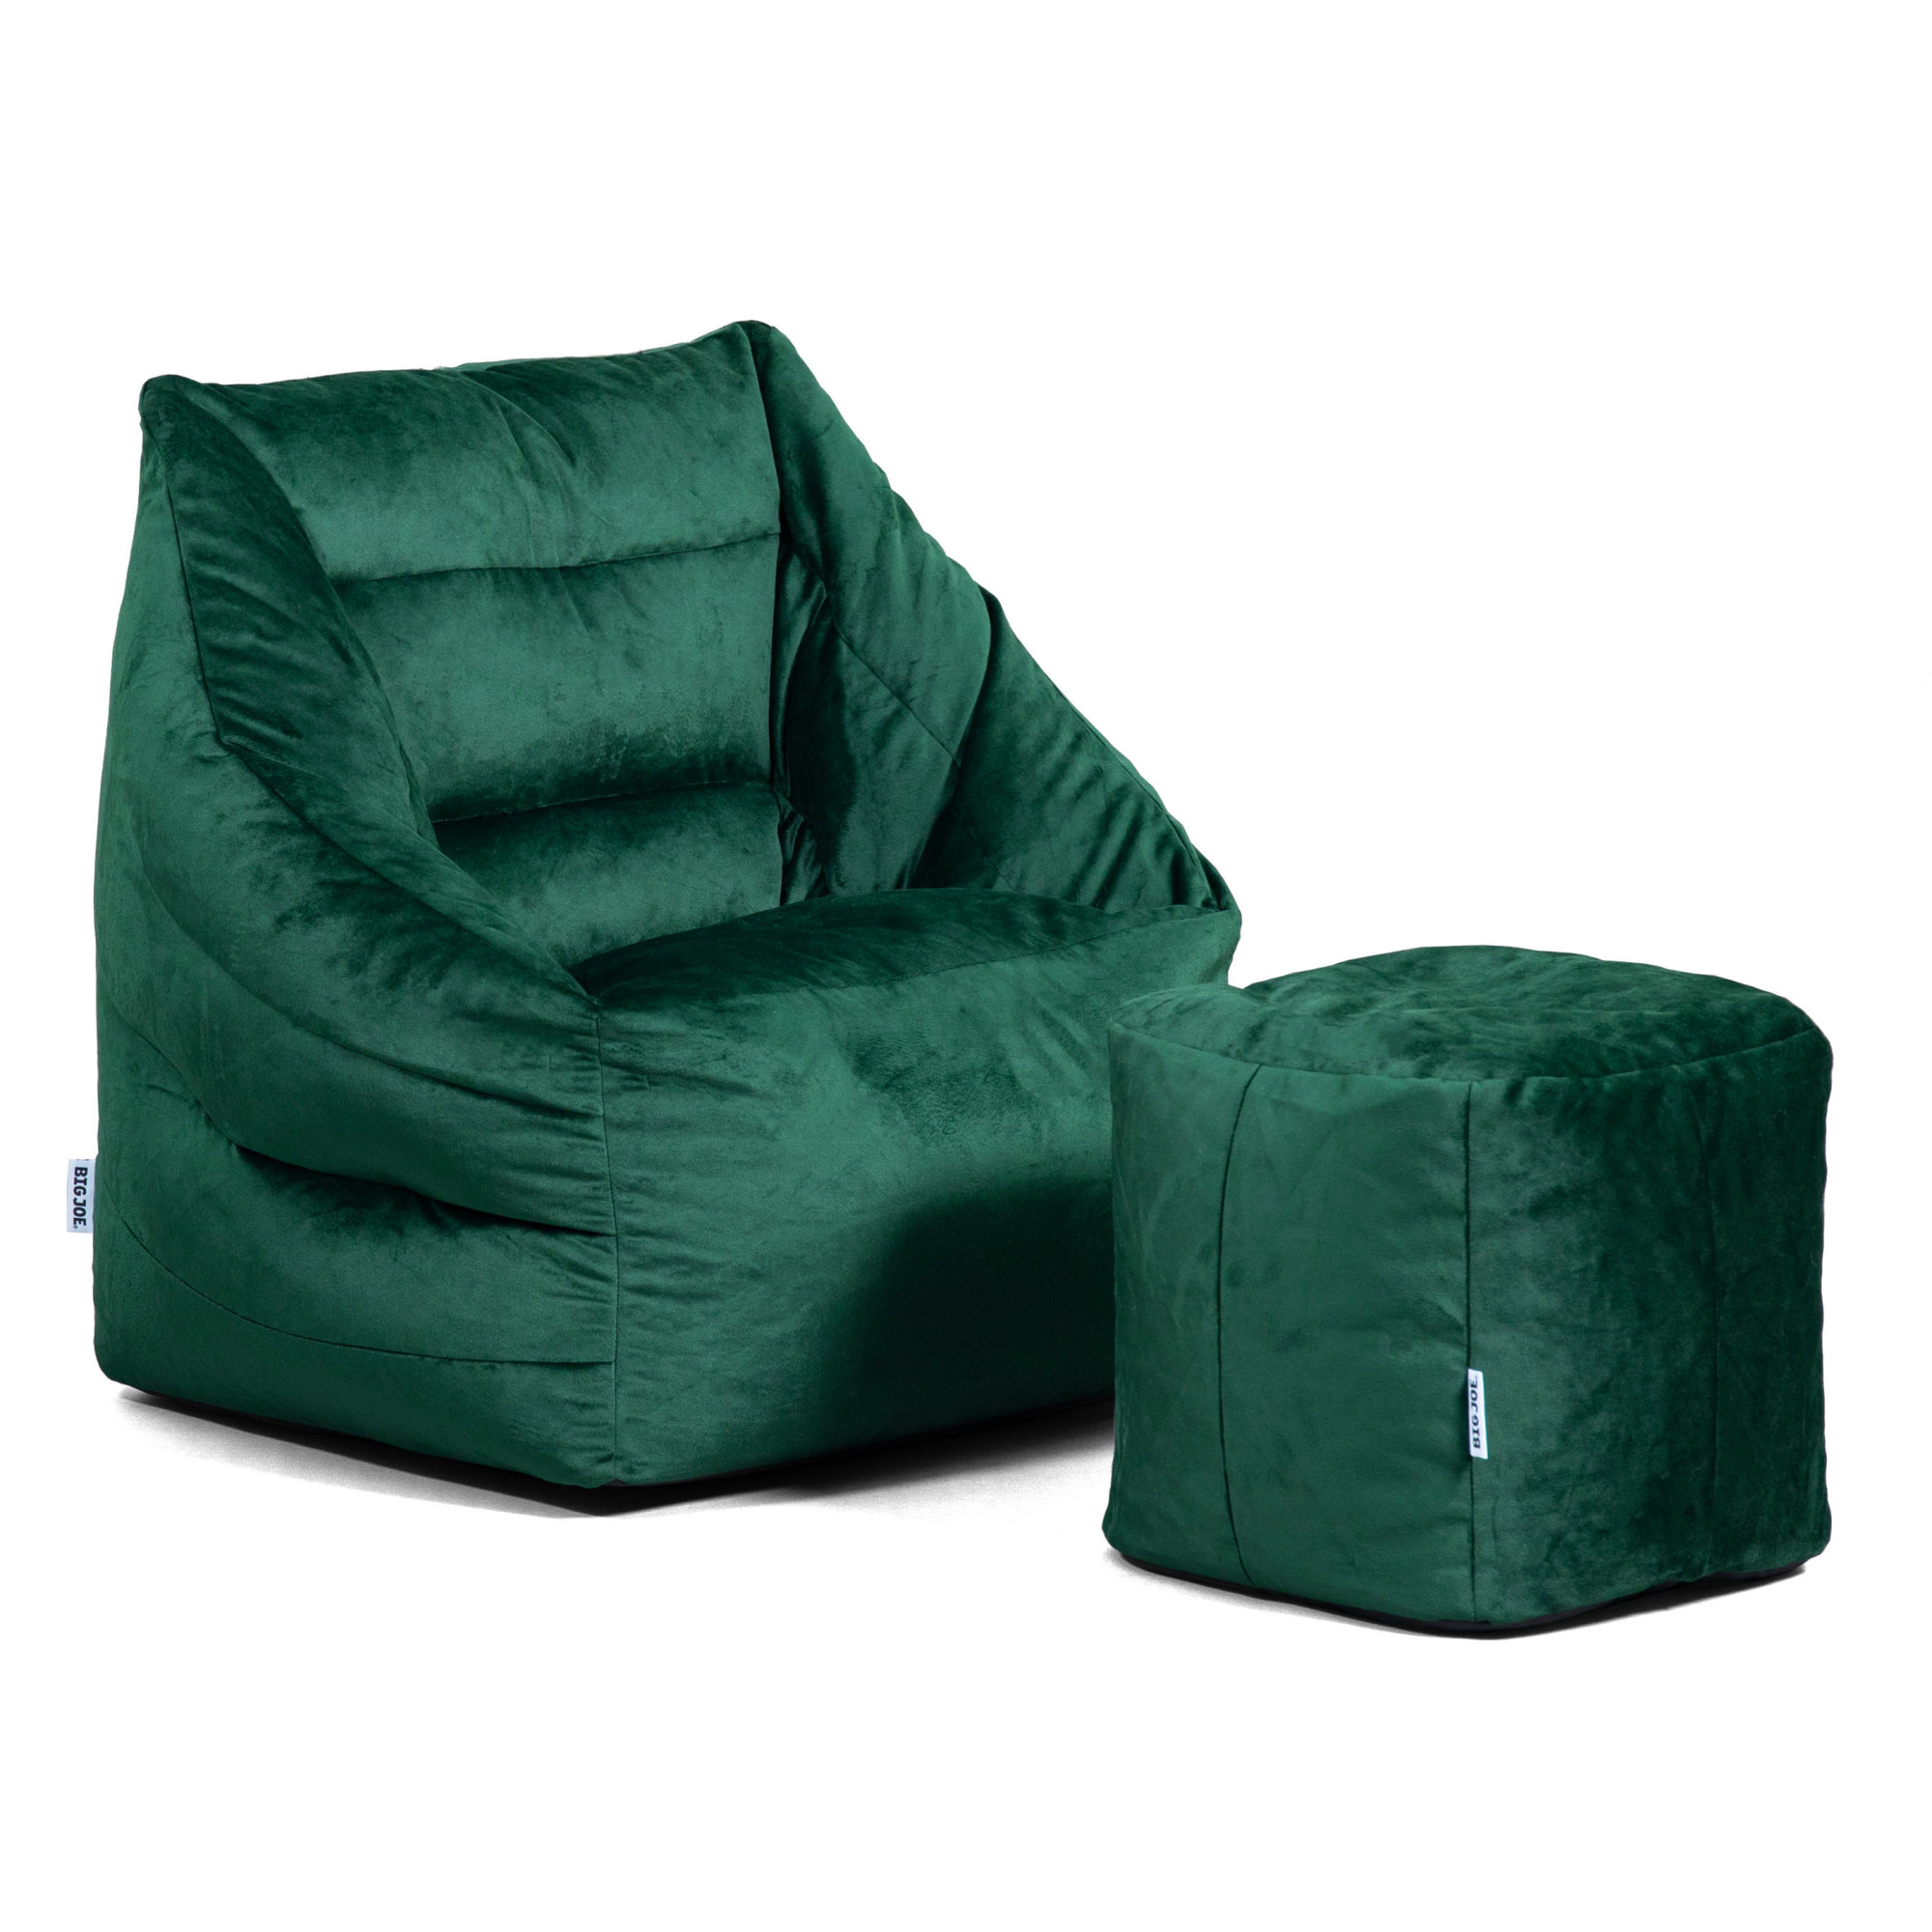 Big Joe Aurora Bean Bag Chair and Pouf Bundle, Deep Emerald Velvet, Soft Polyester, 3.5 feet - image 1 of 5